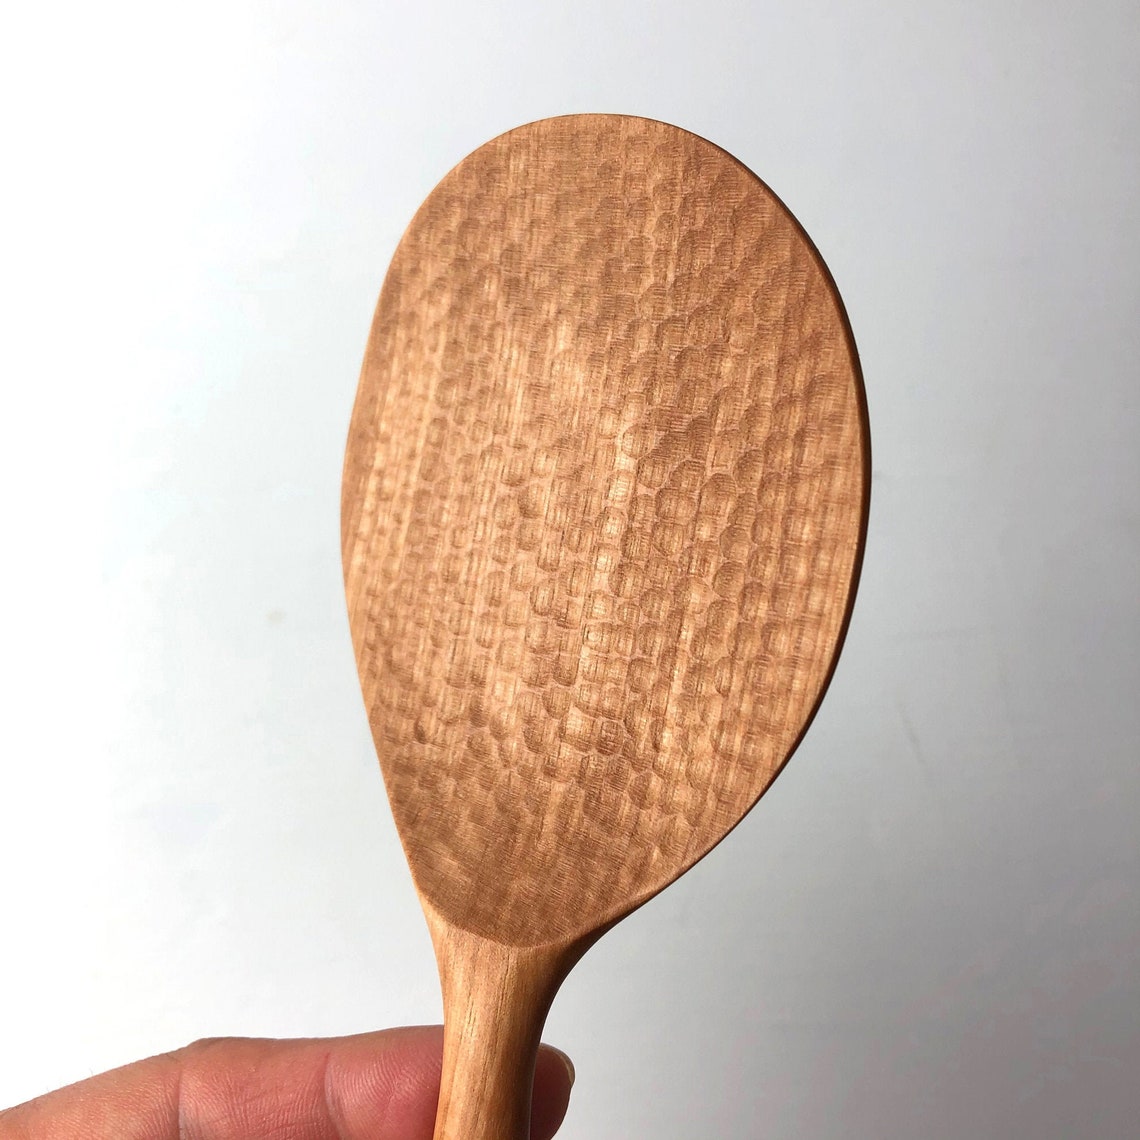 Birch wooden rice spatula Korean rice paddle | Etsy